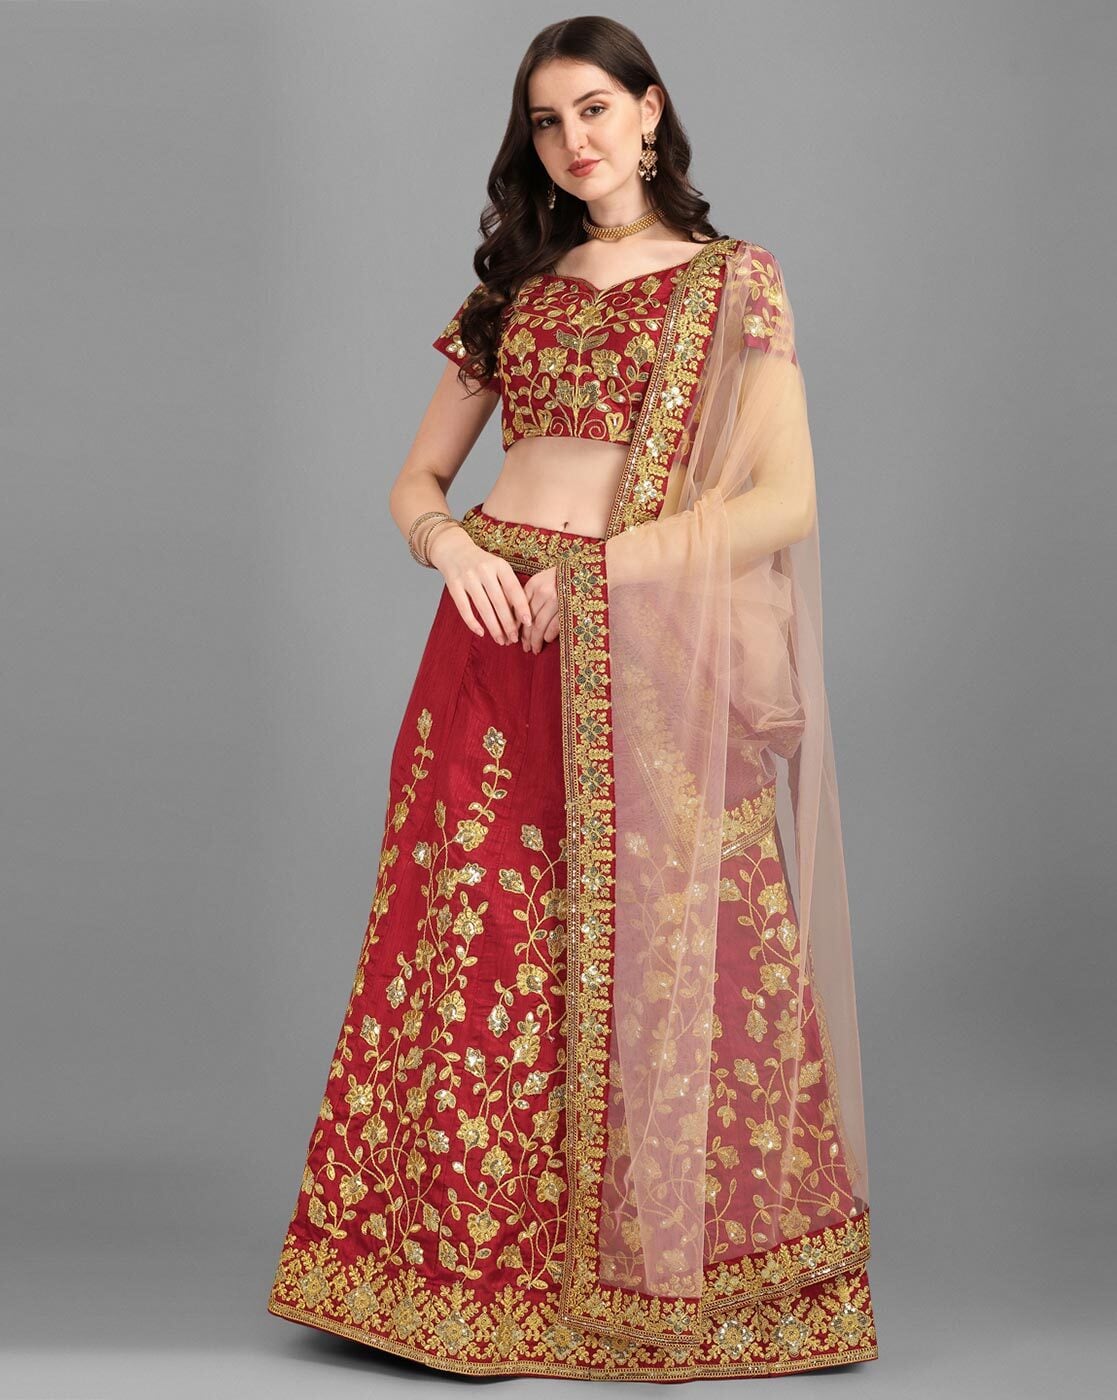 Nivah Fashion Wedding Collection Lehenga Choli With Dupatta-Sr at Rs 1599 |  डिज़ाइनर लहंगा चोली in Surat | ID: 25550927297